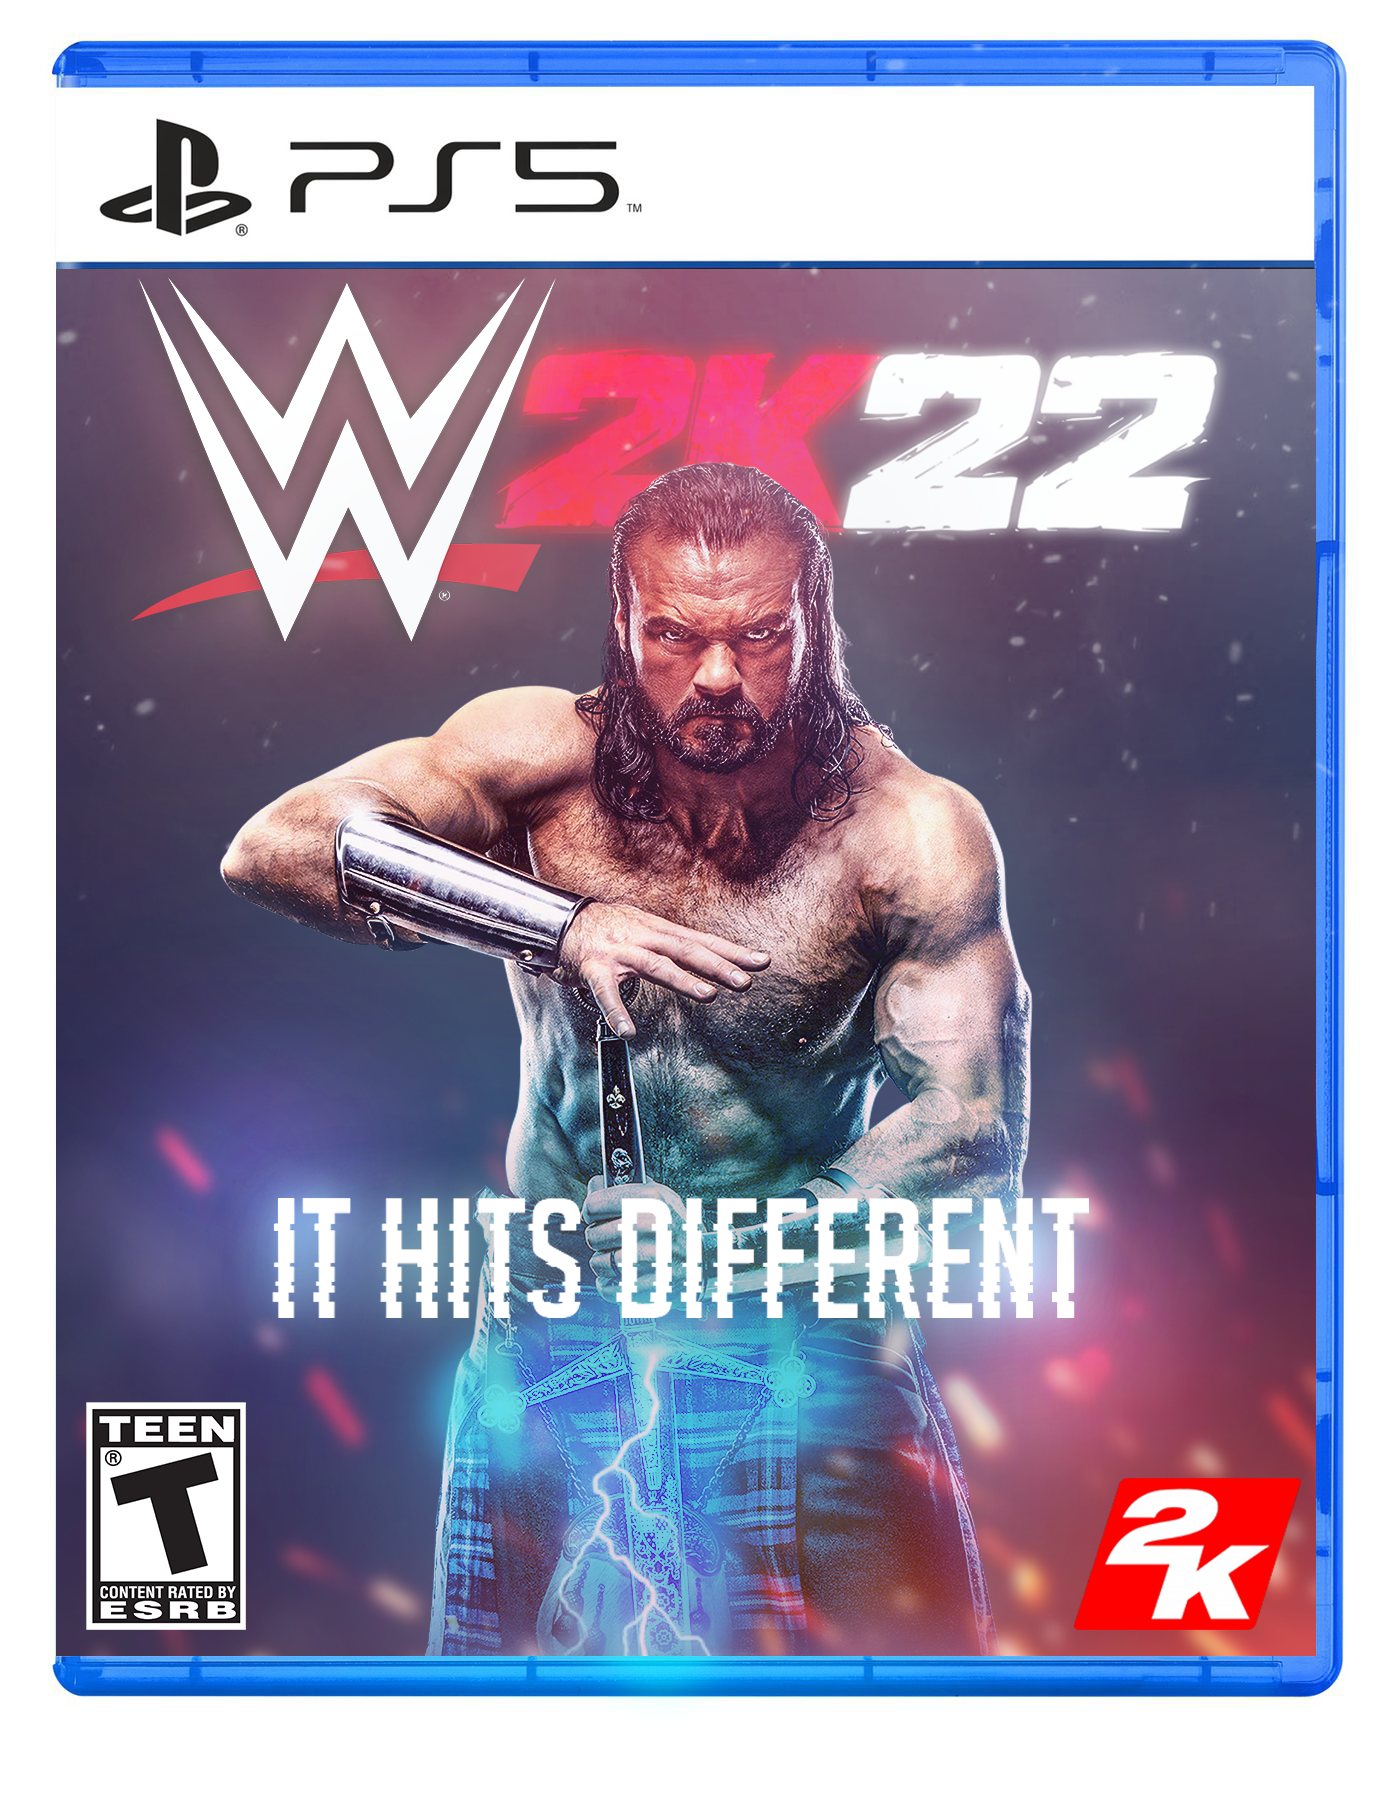 WWE 2K22 Drew McIntyre Cover: WWEGames